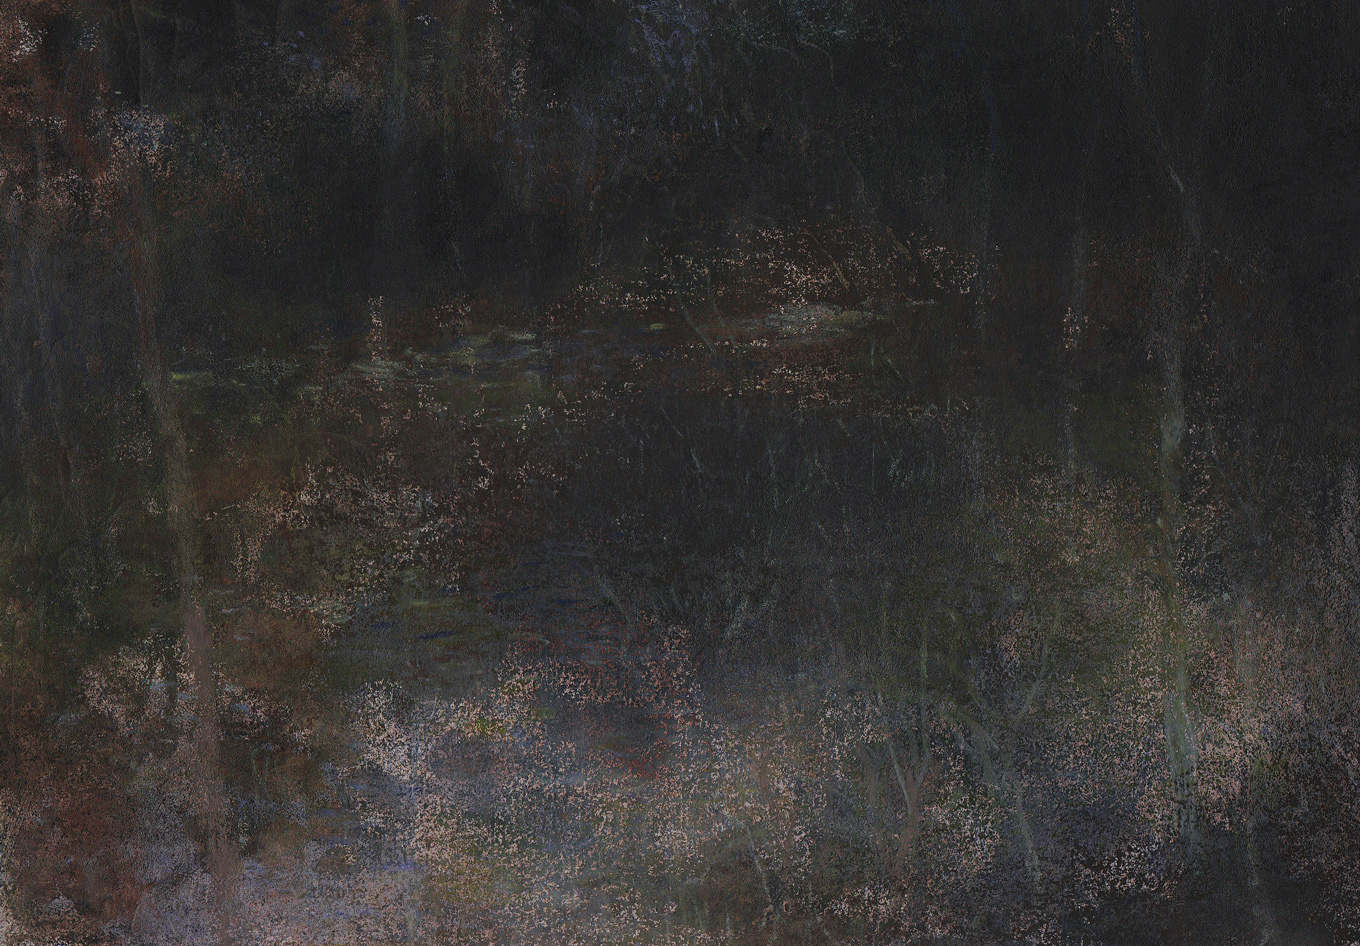 L1270 - Nicholas Herbert, British Artist, mixed media landscape painting of Mermaid's Pond Greensand Ridge, 2021